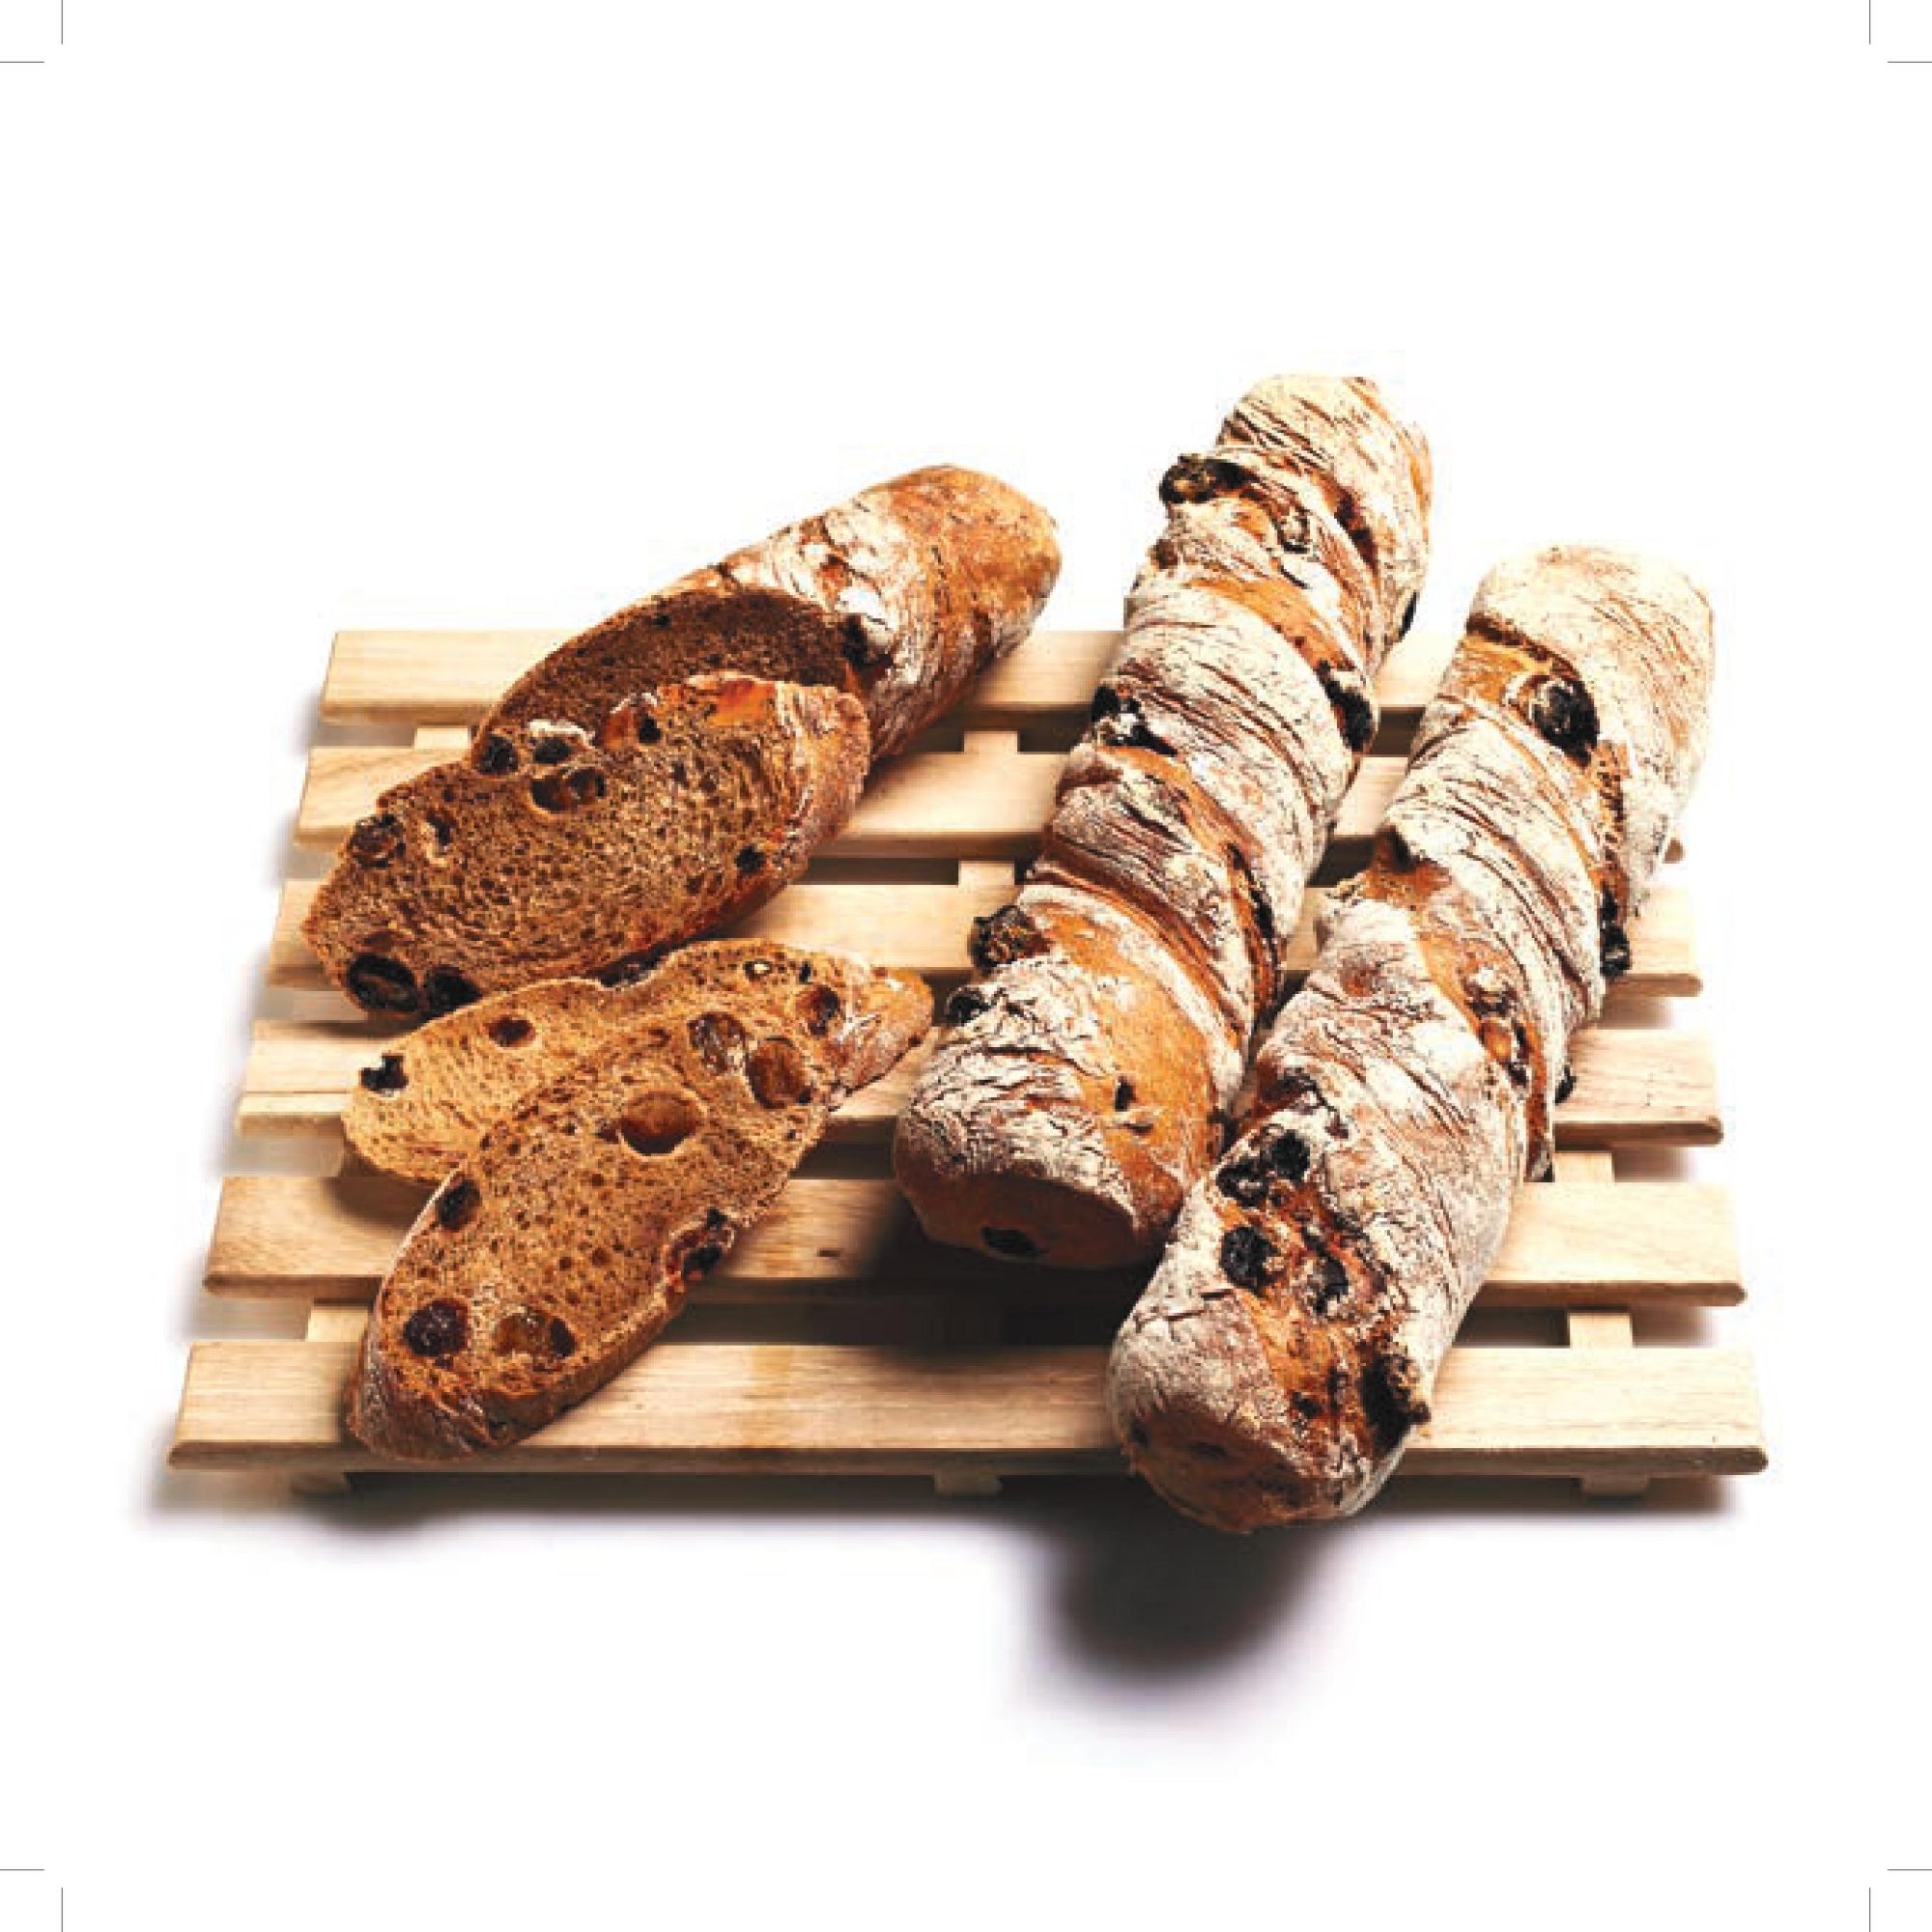 Rustic Rye Bread with California Raisin Starter